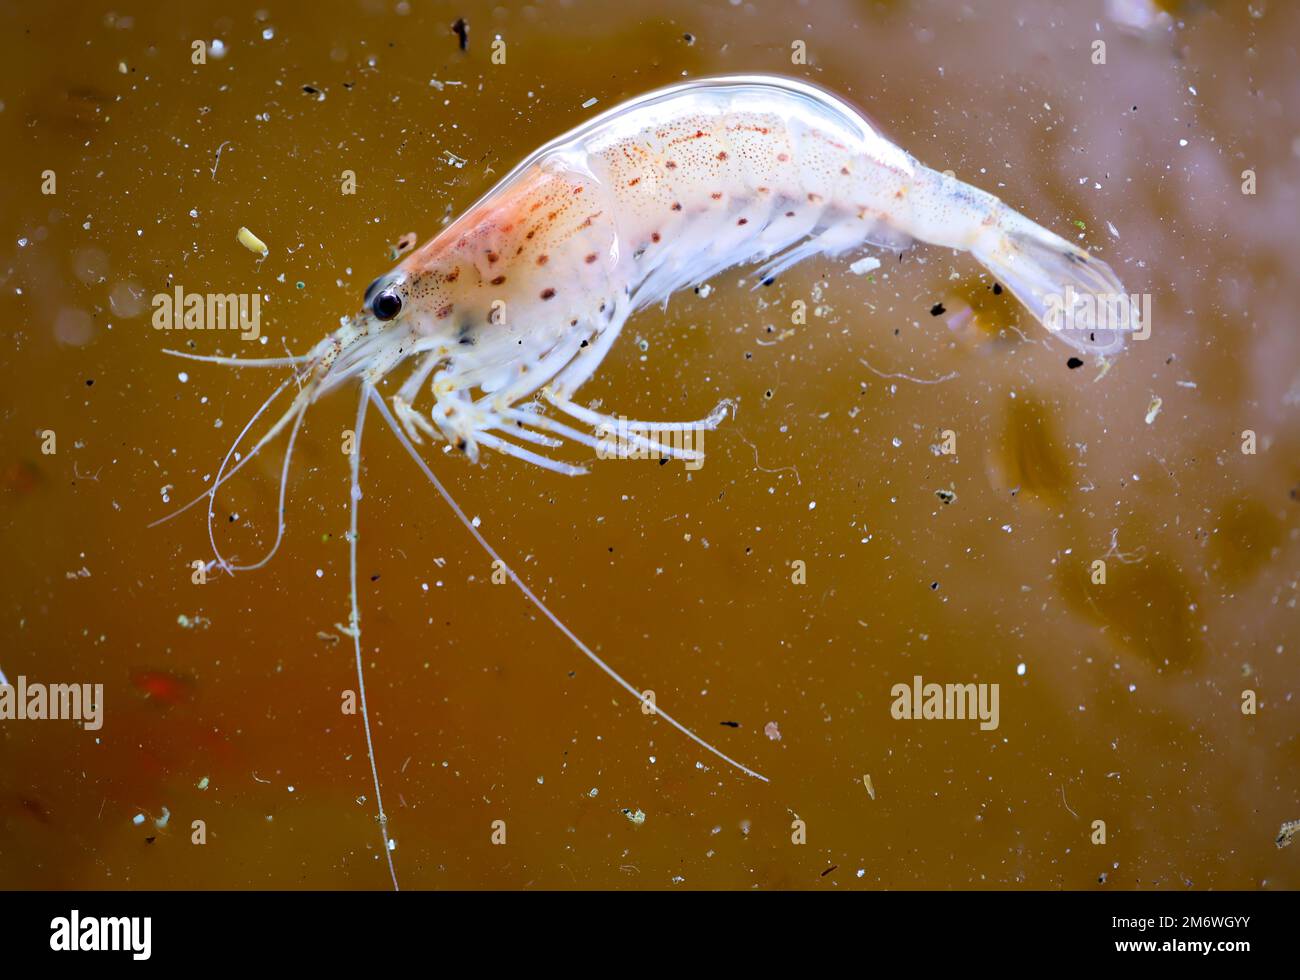 Nahaufnahme eines Amano-Shrimps in einem Aquarium. Stockfoto